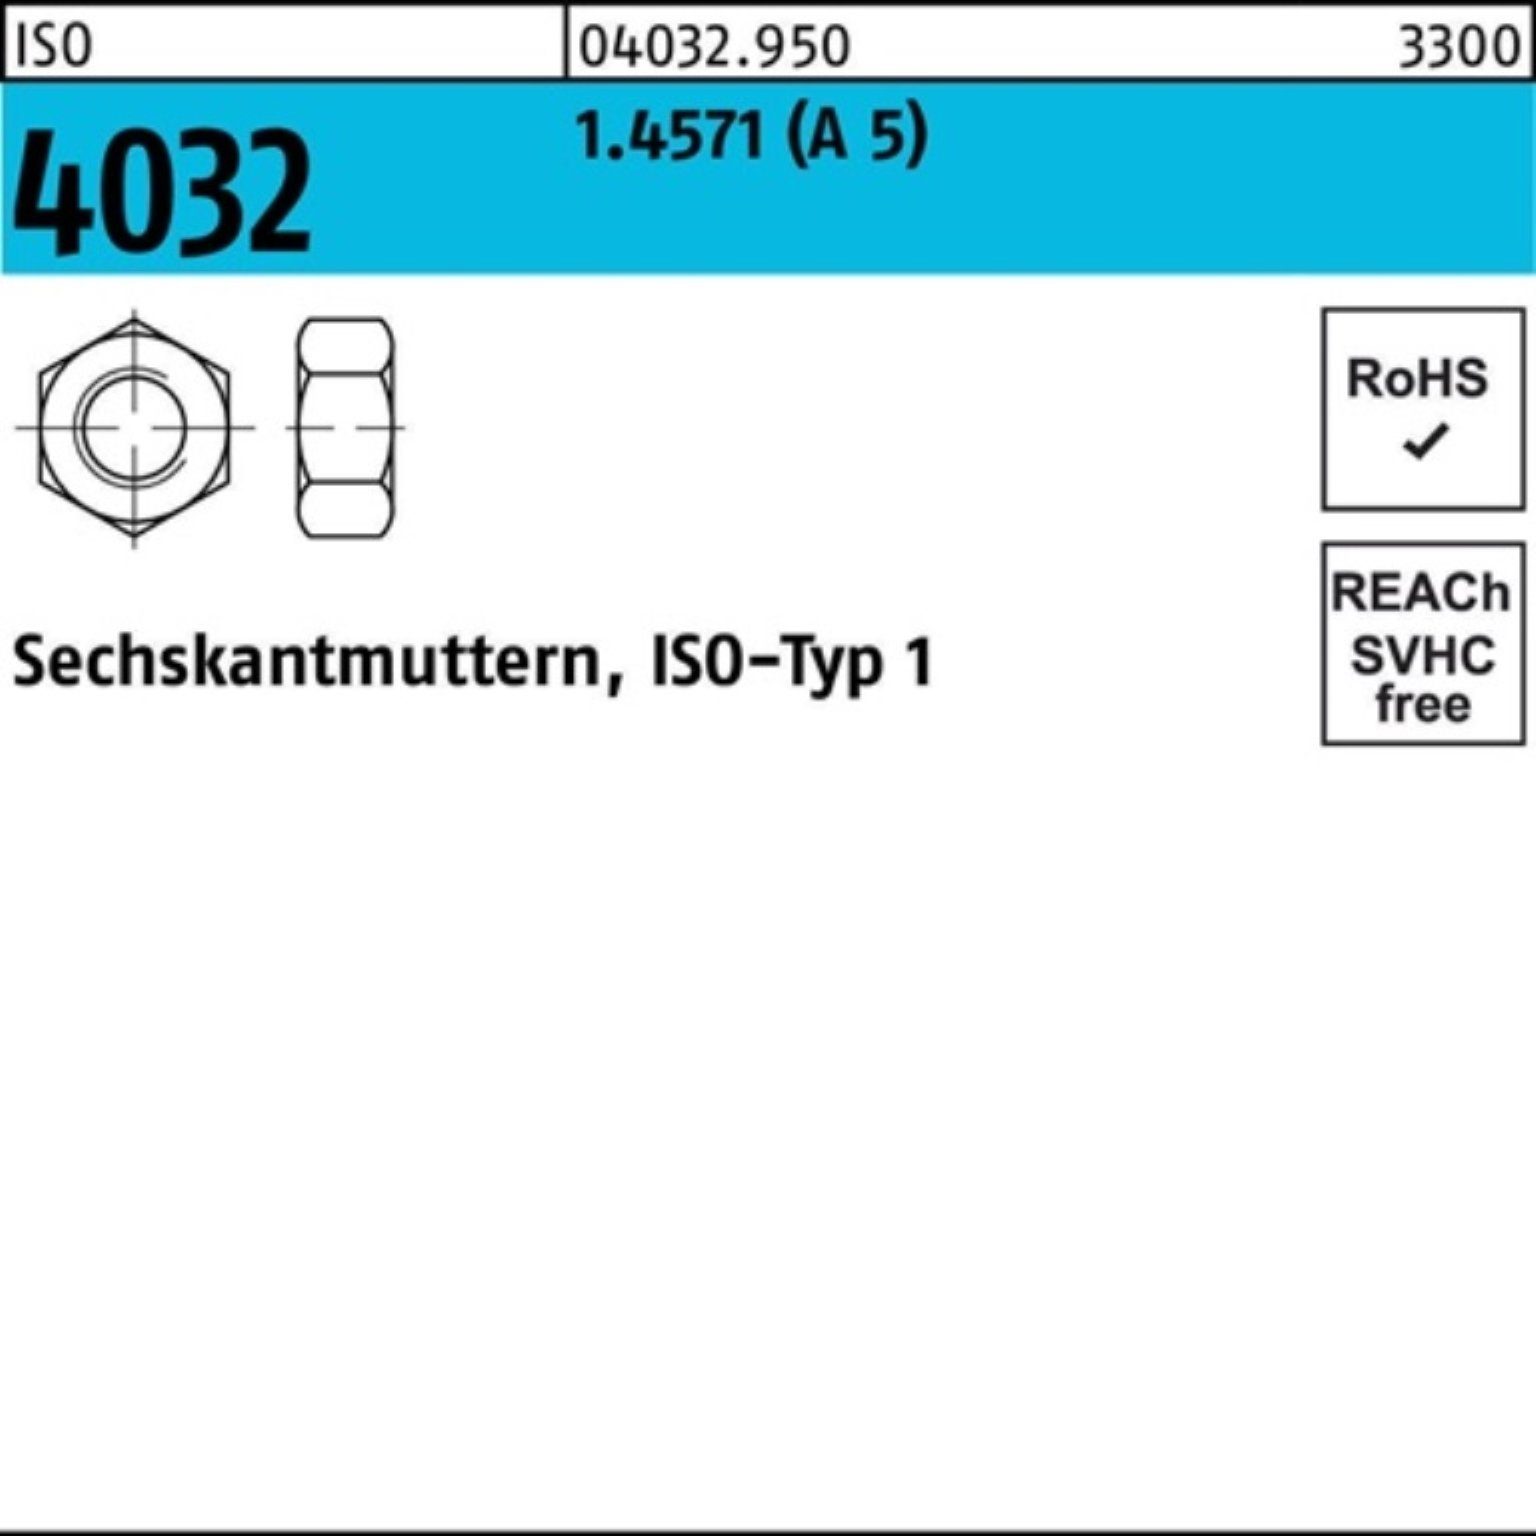 A ISO Muttern 4032 100er ISO 4032 M27 Sechskantmutter 5 Pack 10 Stück Bufab 1.4571